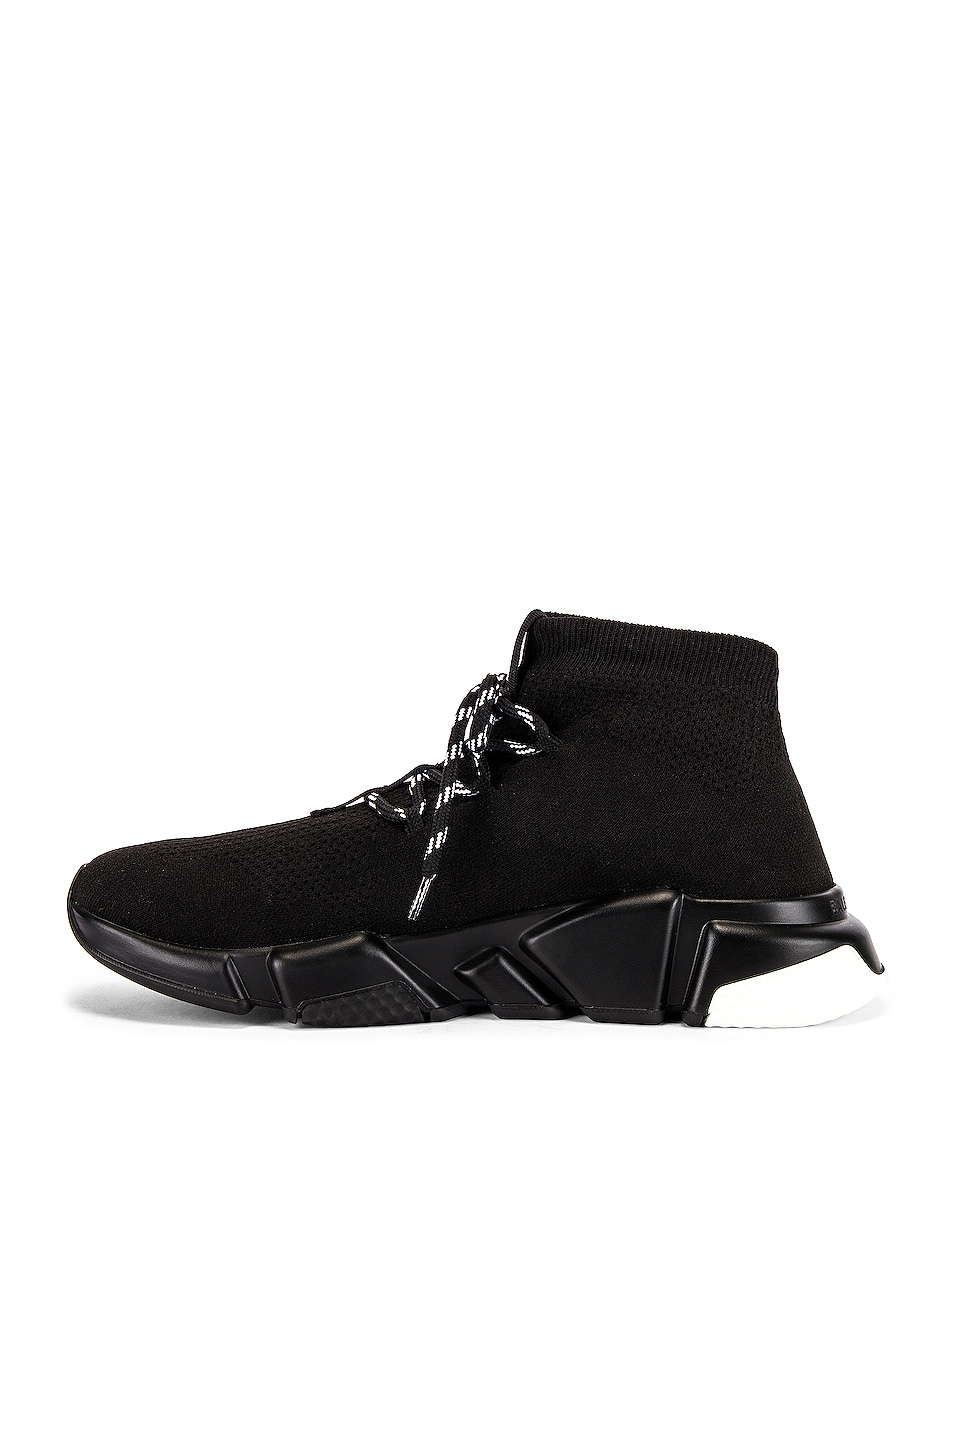 Balenciaga Speed Light Lace-Up Sneaker in Black | FWRD